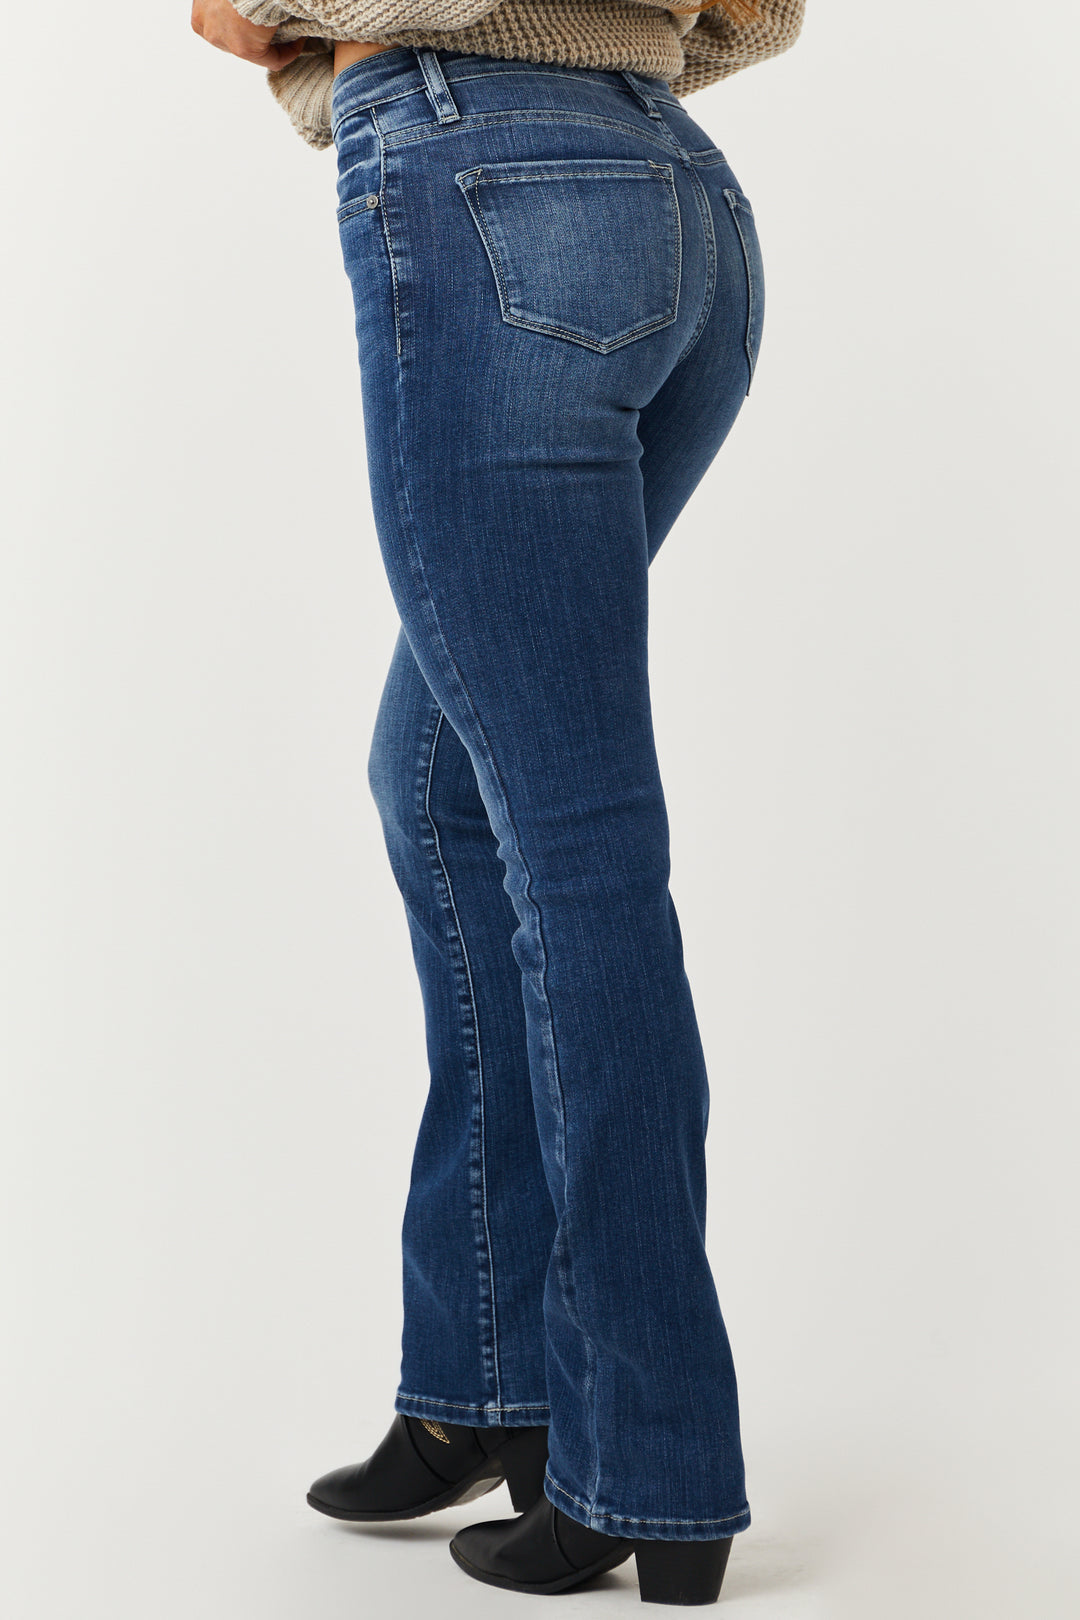 KanCan Medium Wash High Rise Skinny Bootcut Jeans & Lime Lush